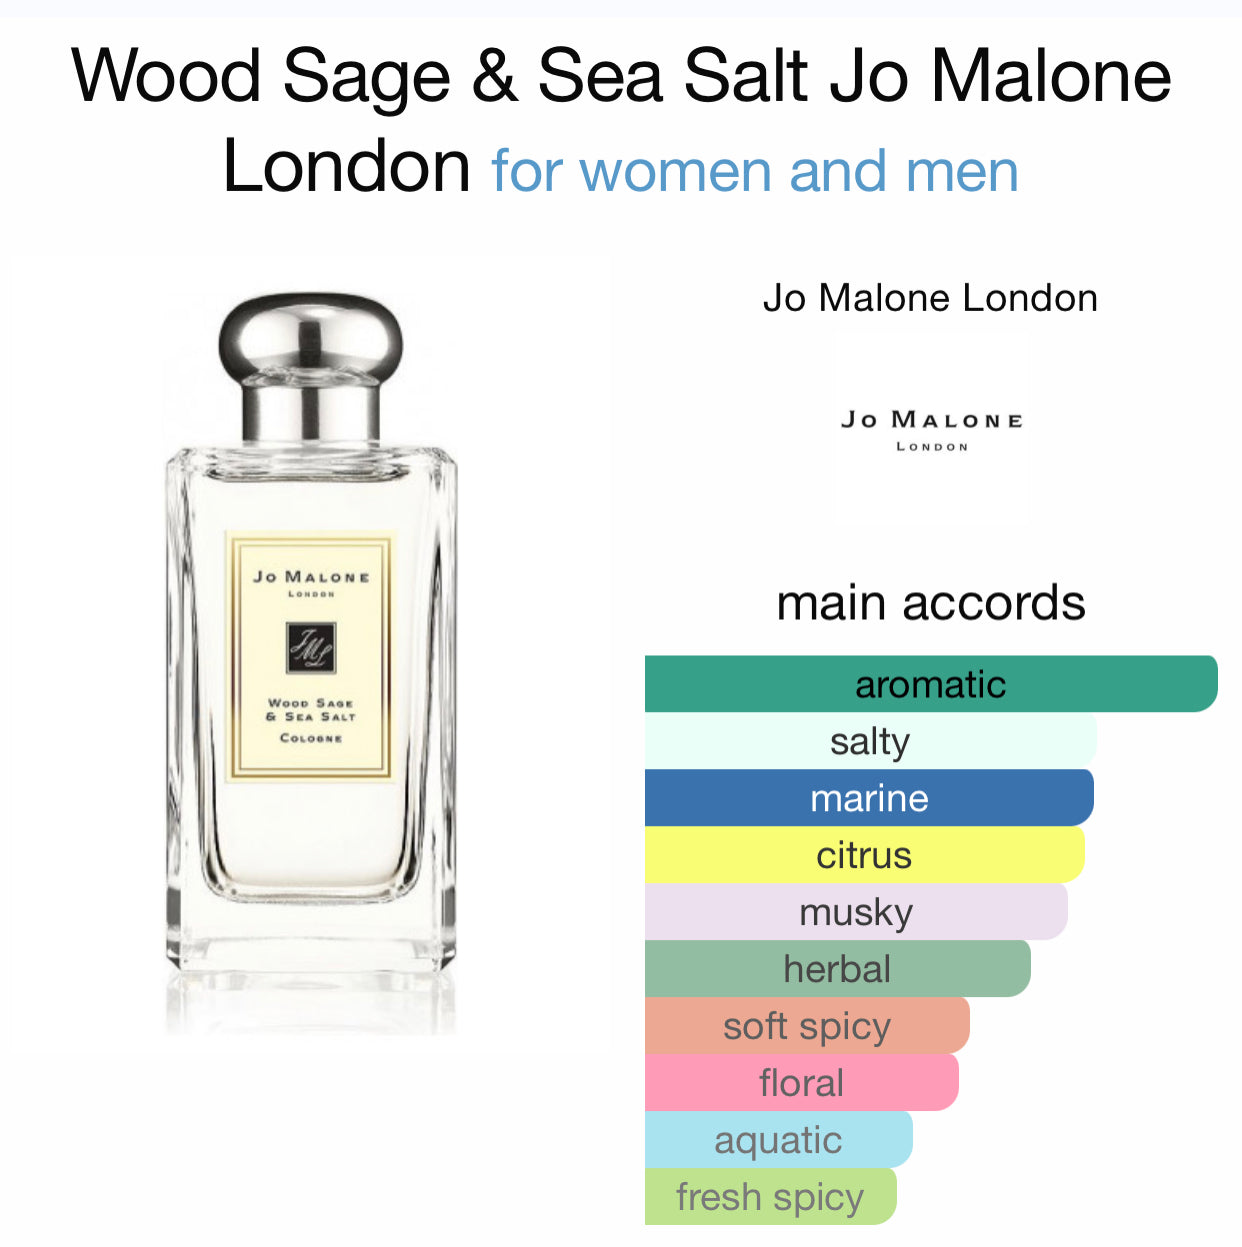 Inspired by Wood Sage and Sea Salt Eau De Parfum